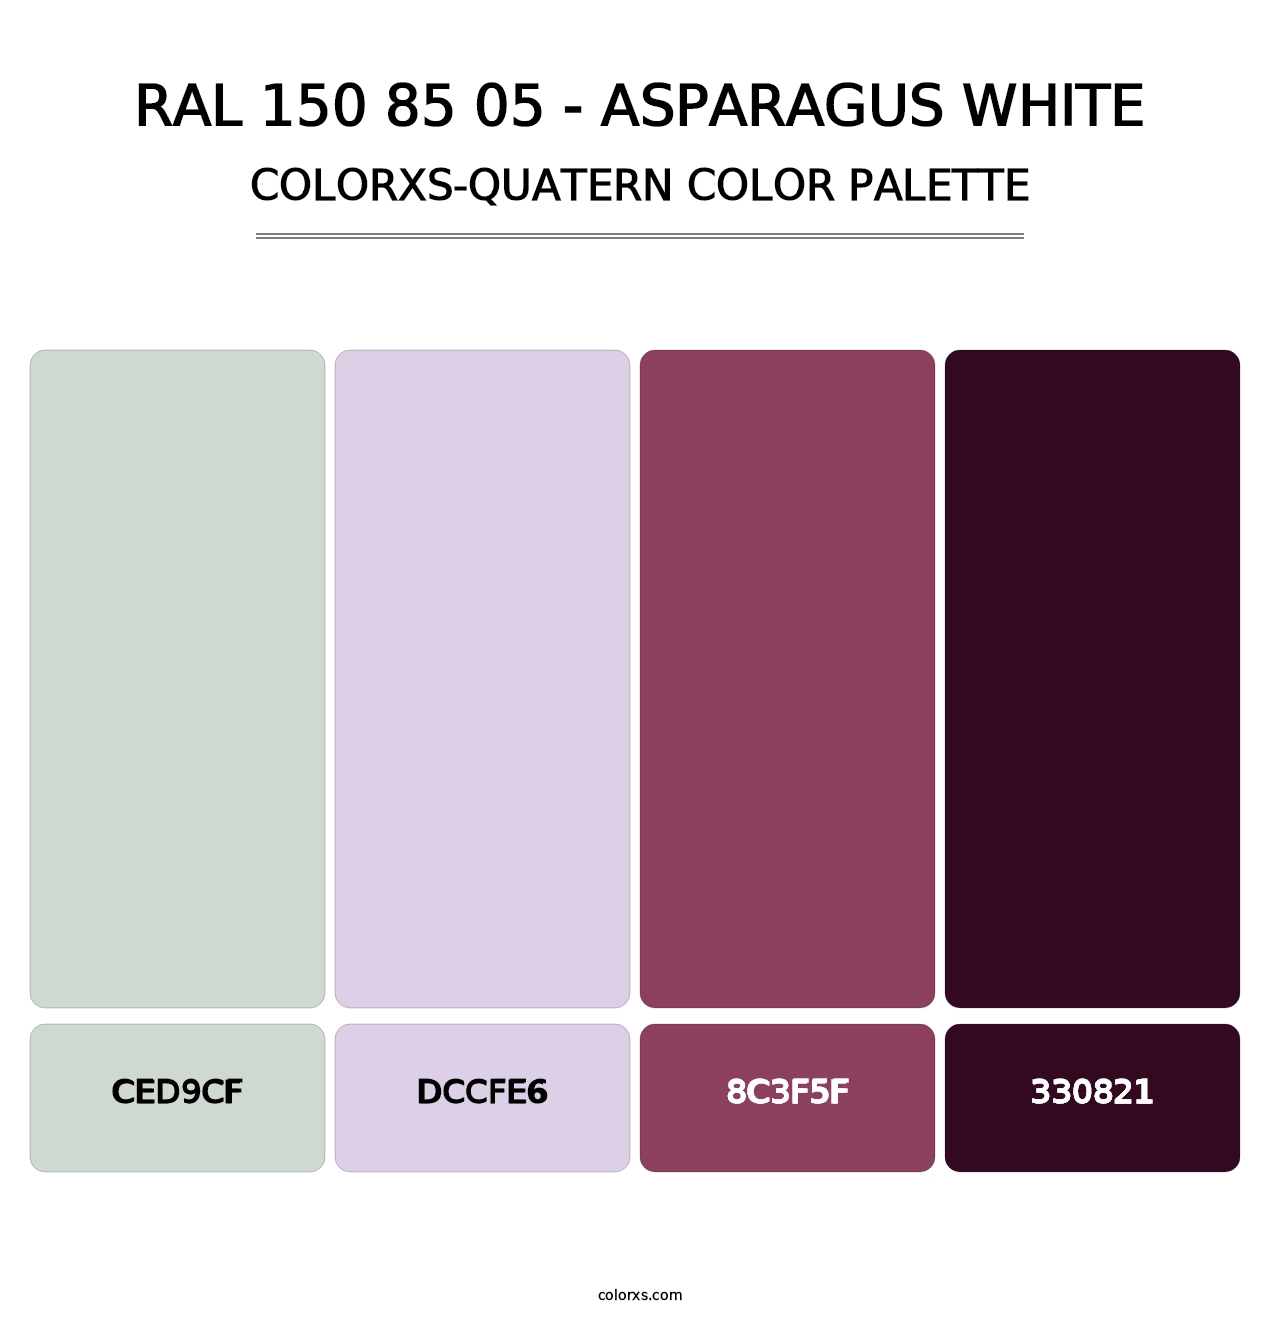 RAL 150 85 05 - Asparagus White - Colorxs Quatern Palette